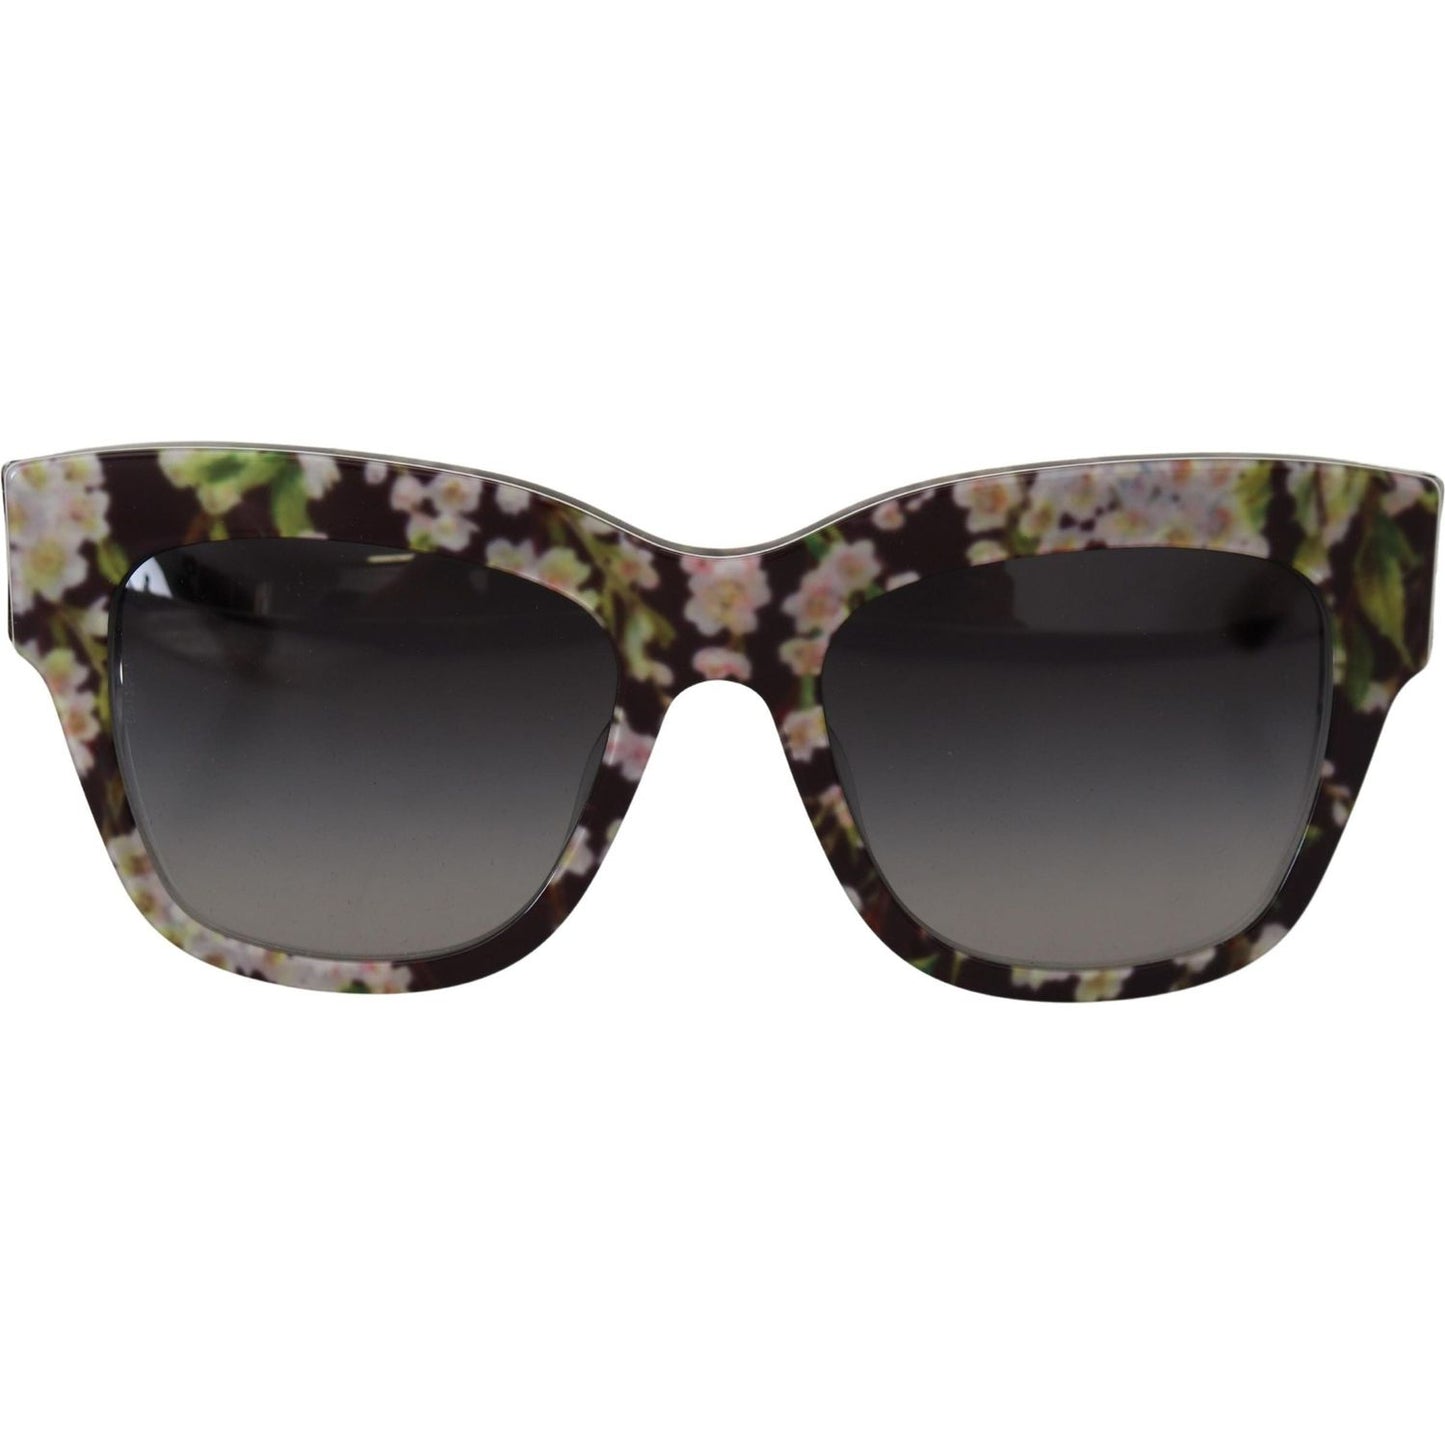 Dolce & Gabbana Elegant Multicolor Gradient Sunglasses black-floral-acetate-rectangle-shades-dg4231f-sunglasses